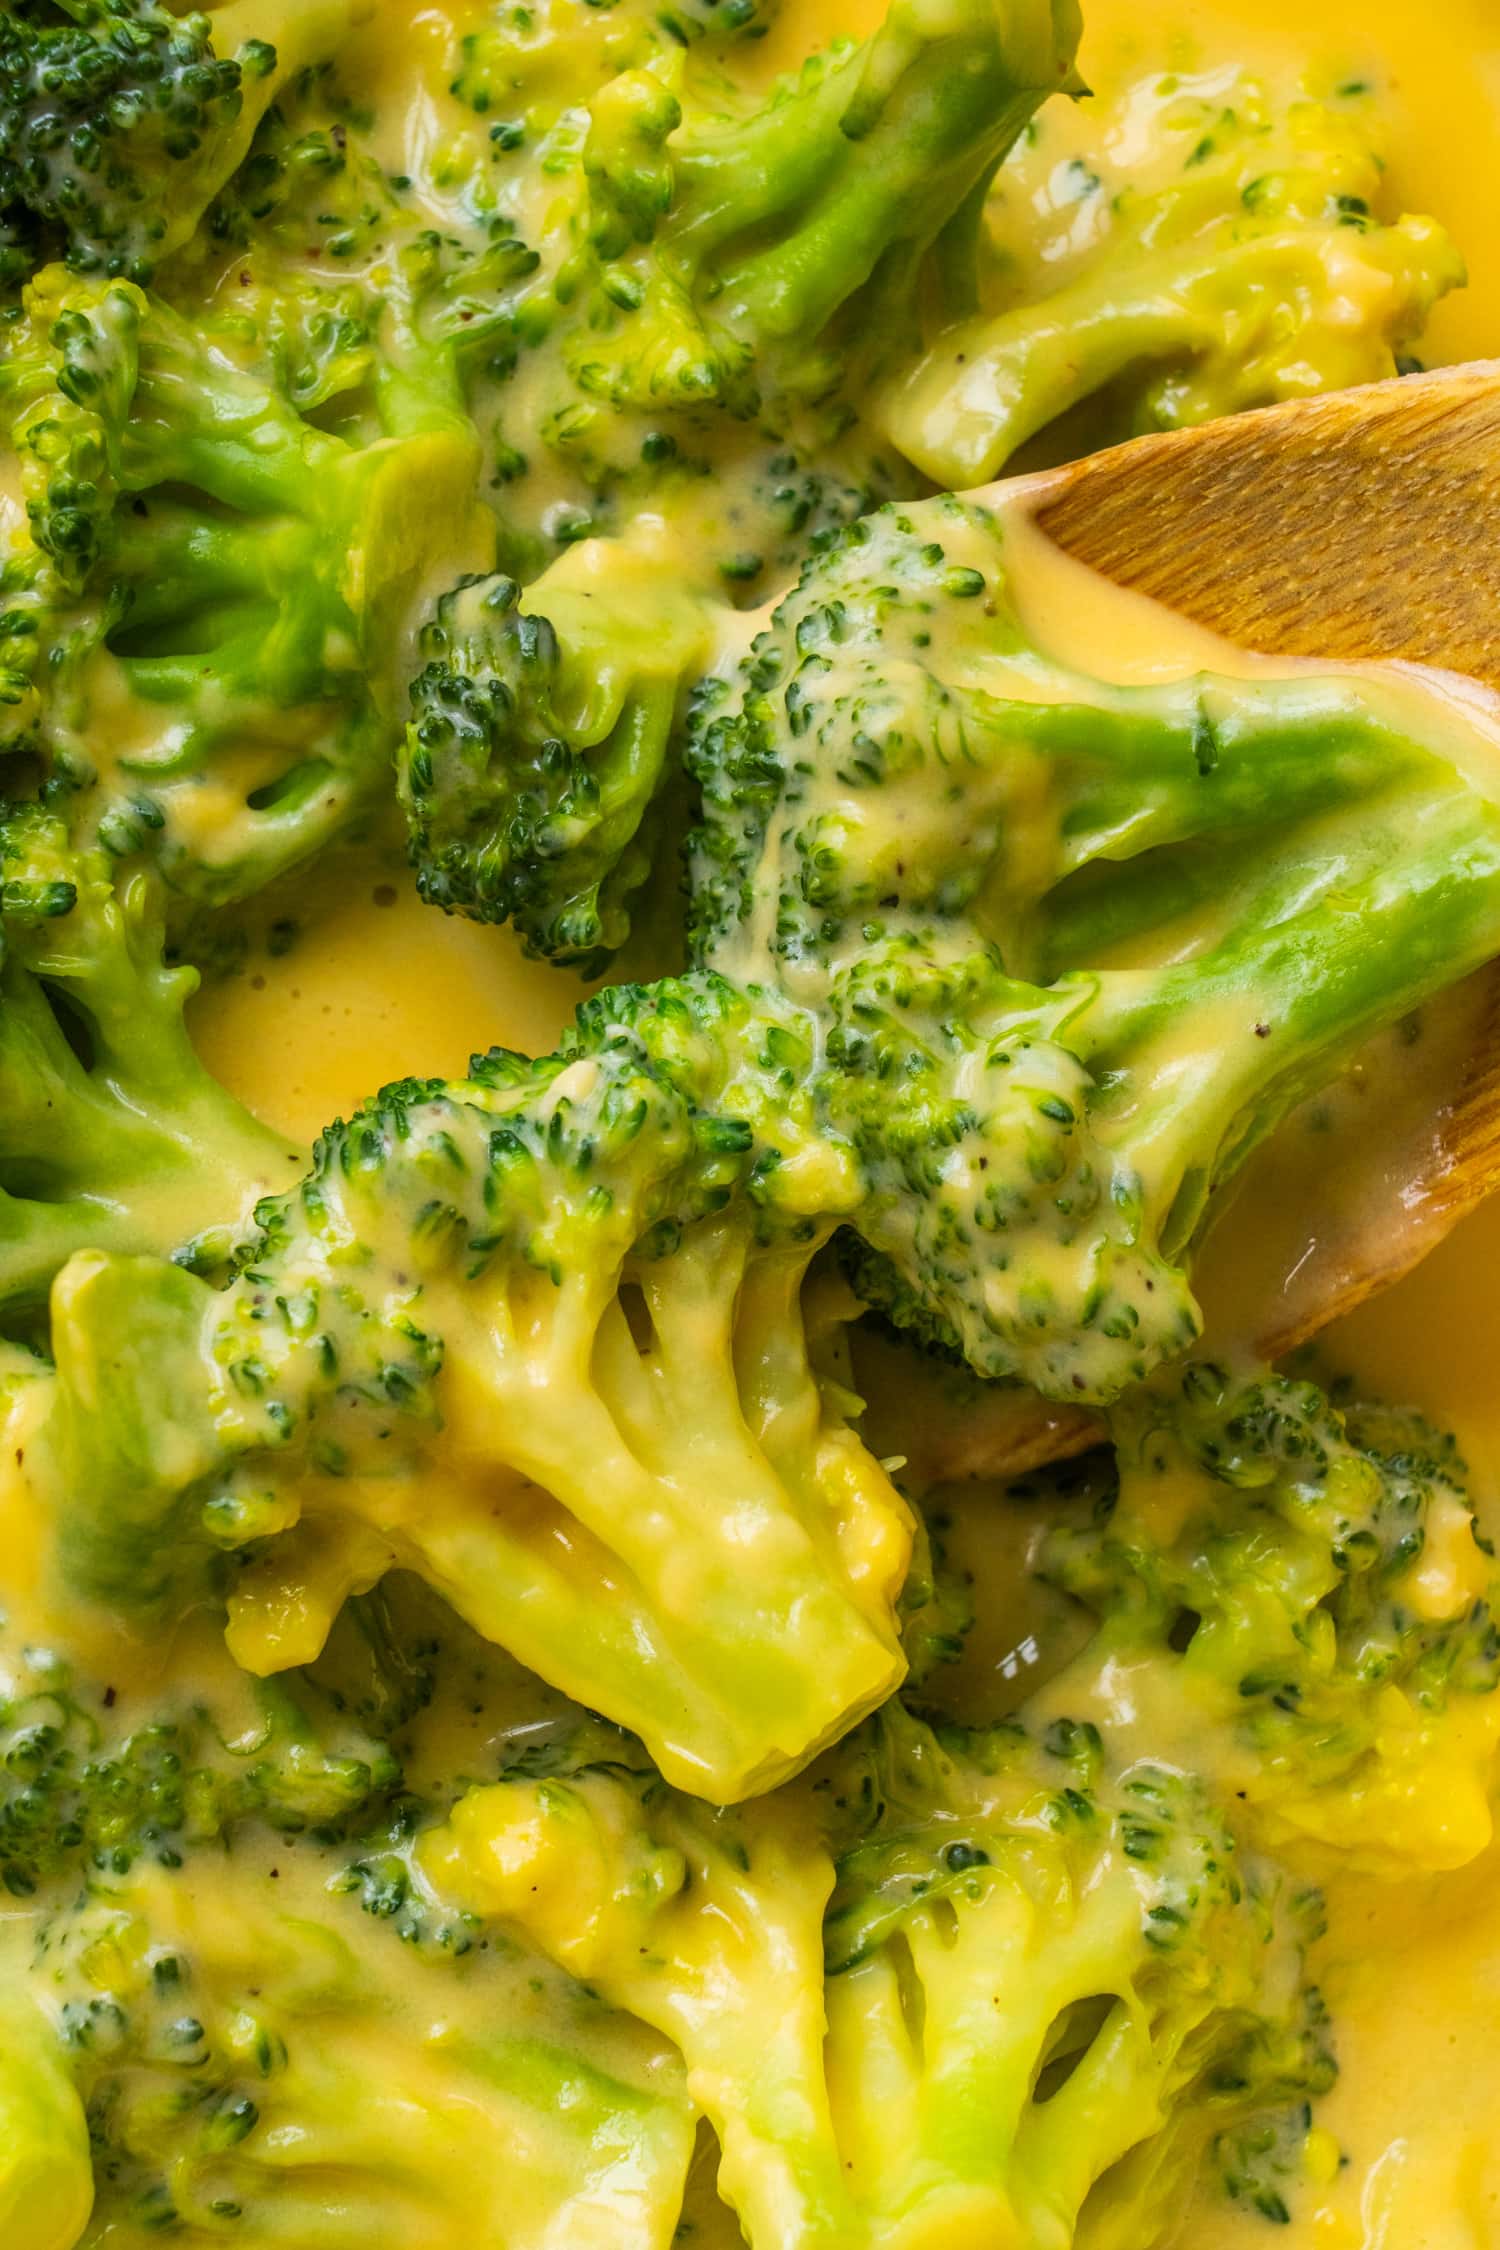 how do i make cheese sauce for broccoli